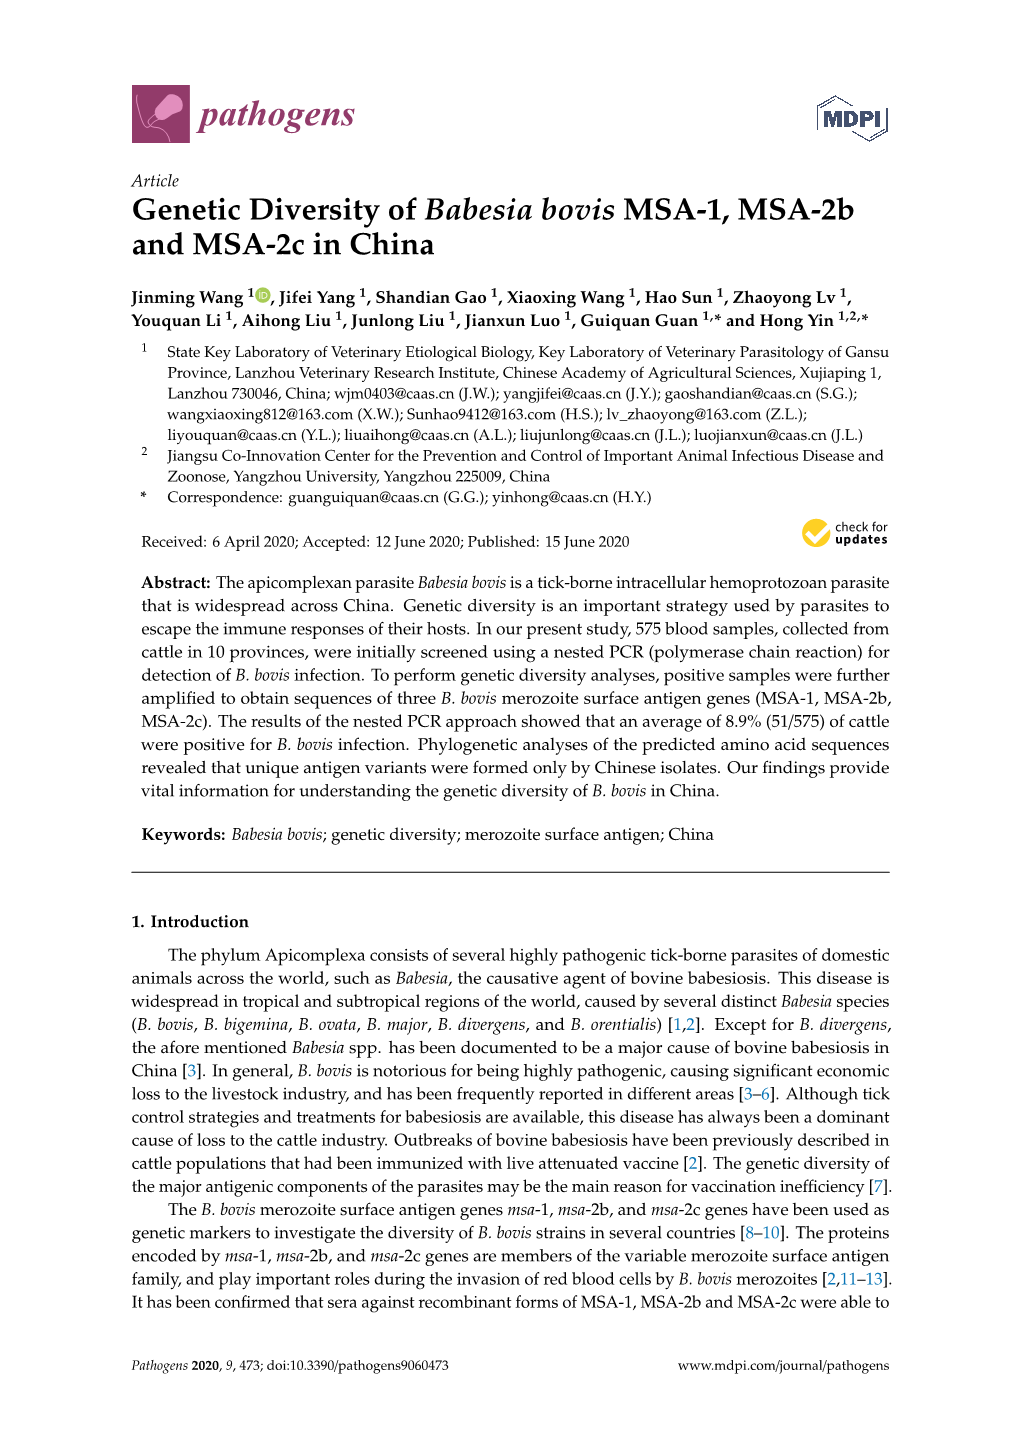 Genetic Diversity of Babesia Bovis MSA-1, MSA-2B and MSA-2C in China